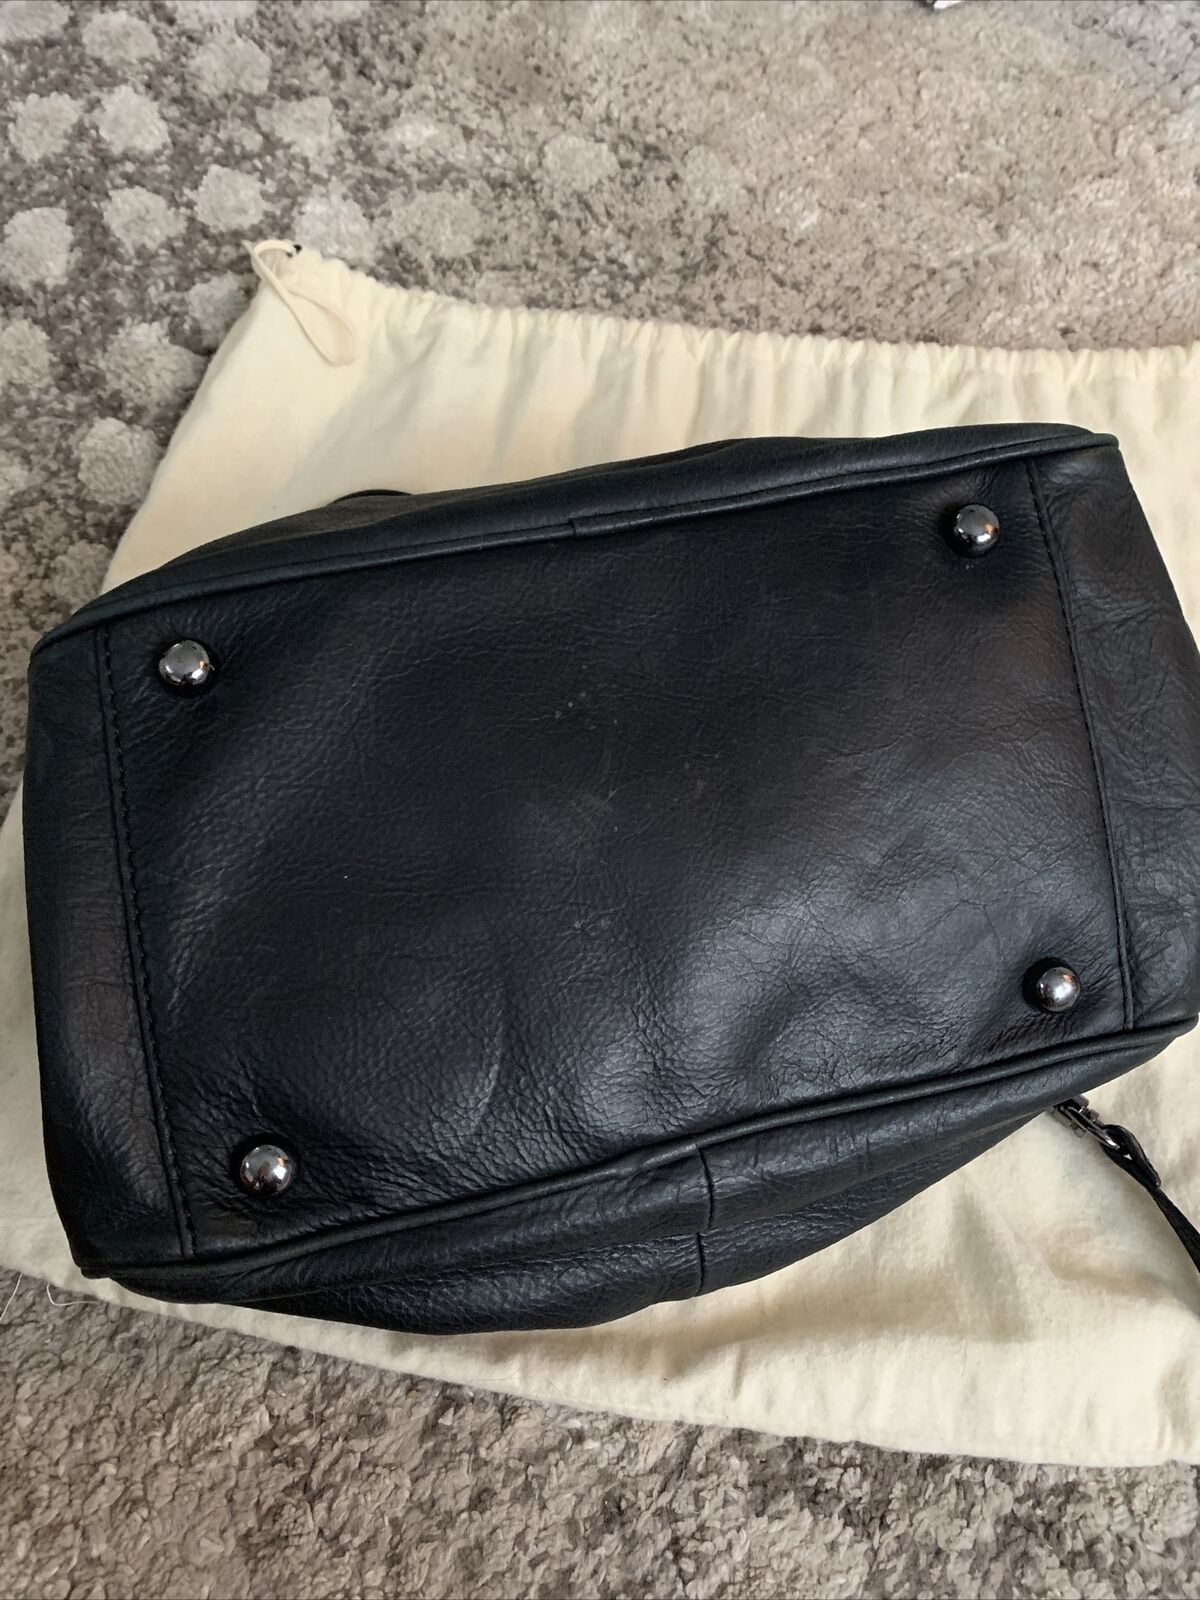 J. Crew black leather bag - image 4